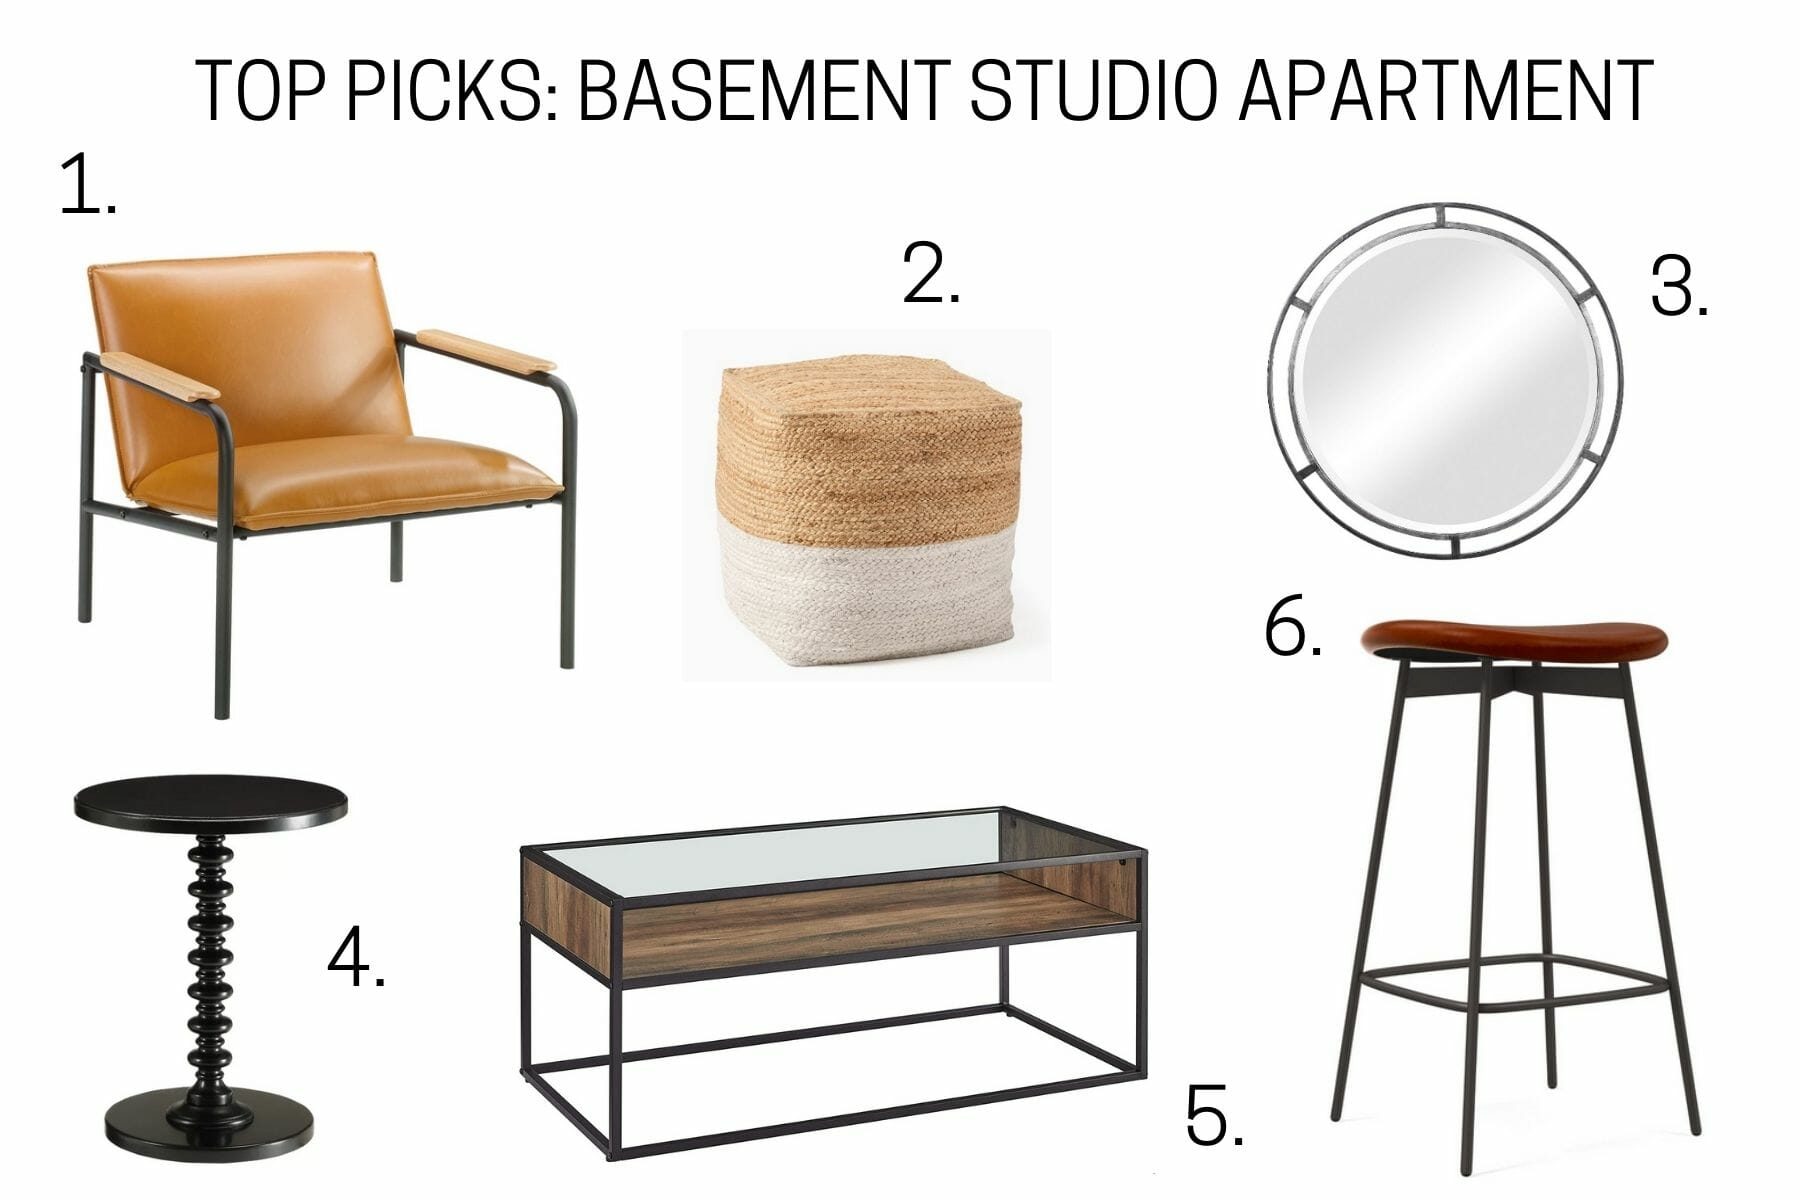 Basement studio apartment top picks list